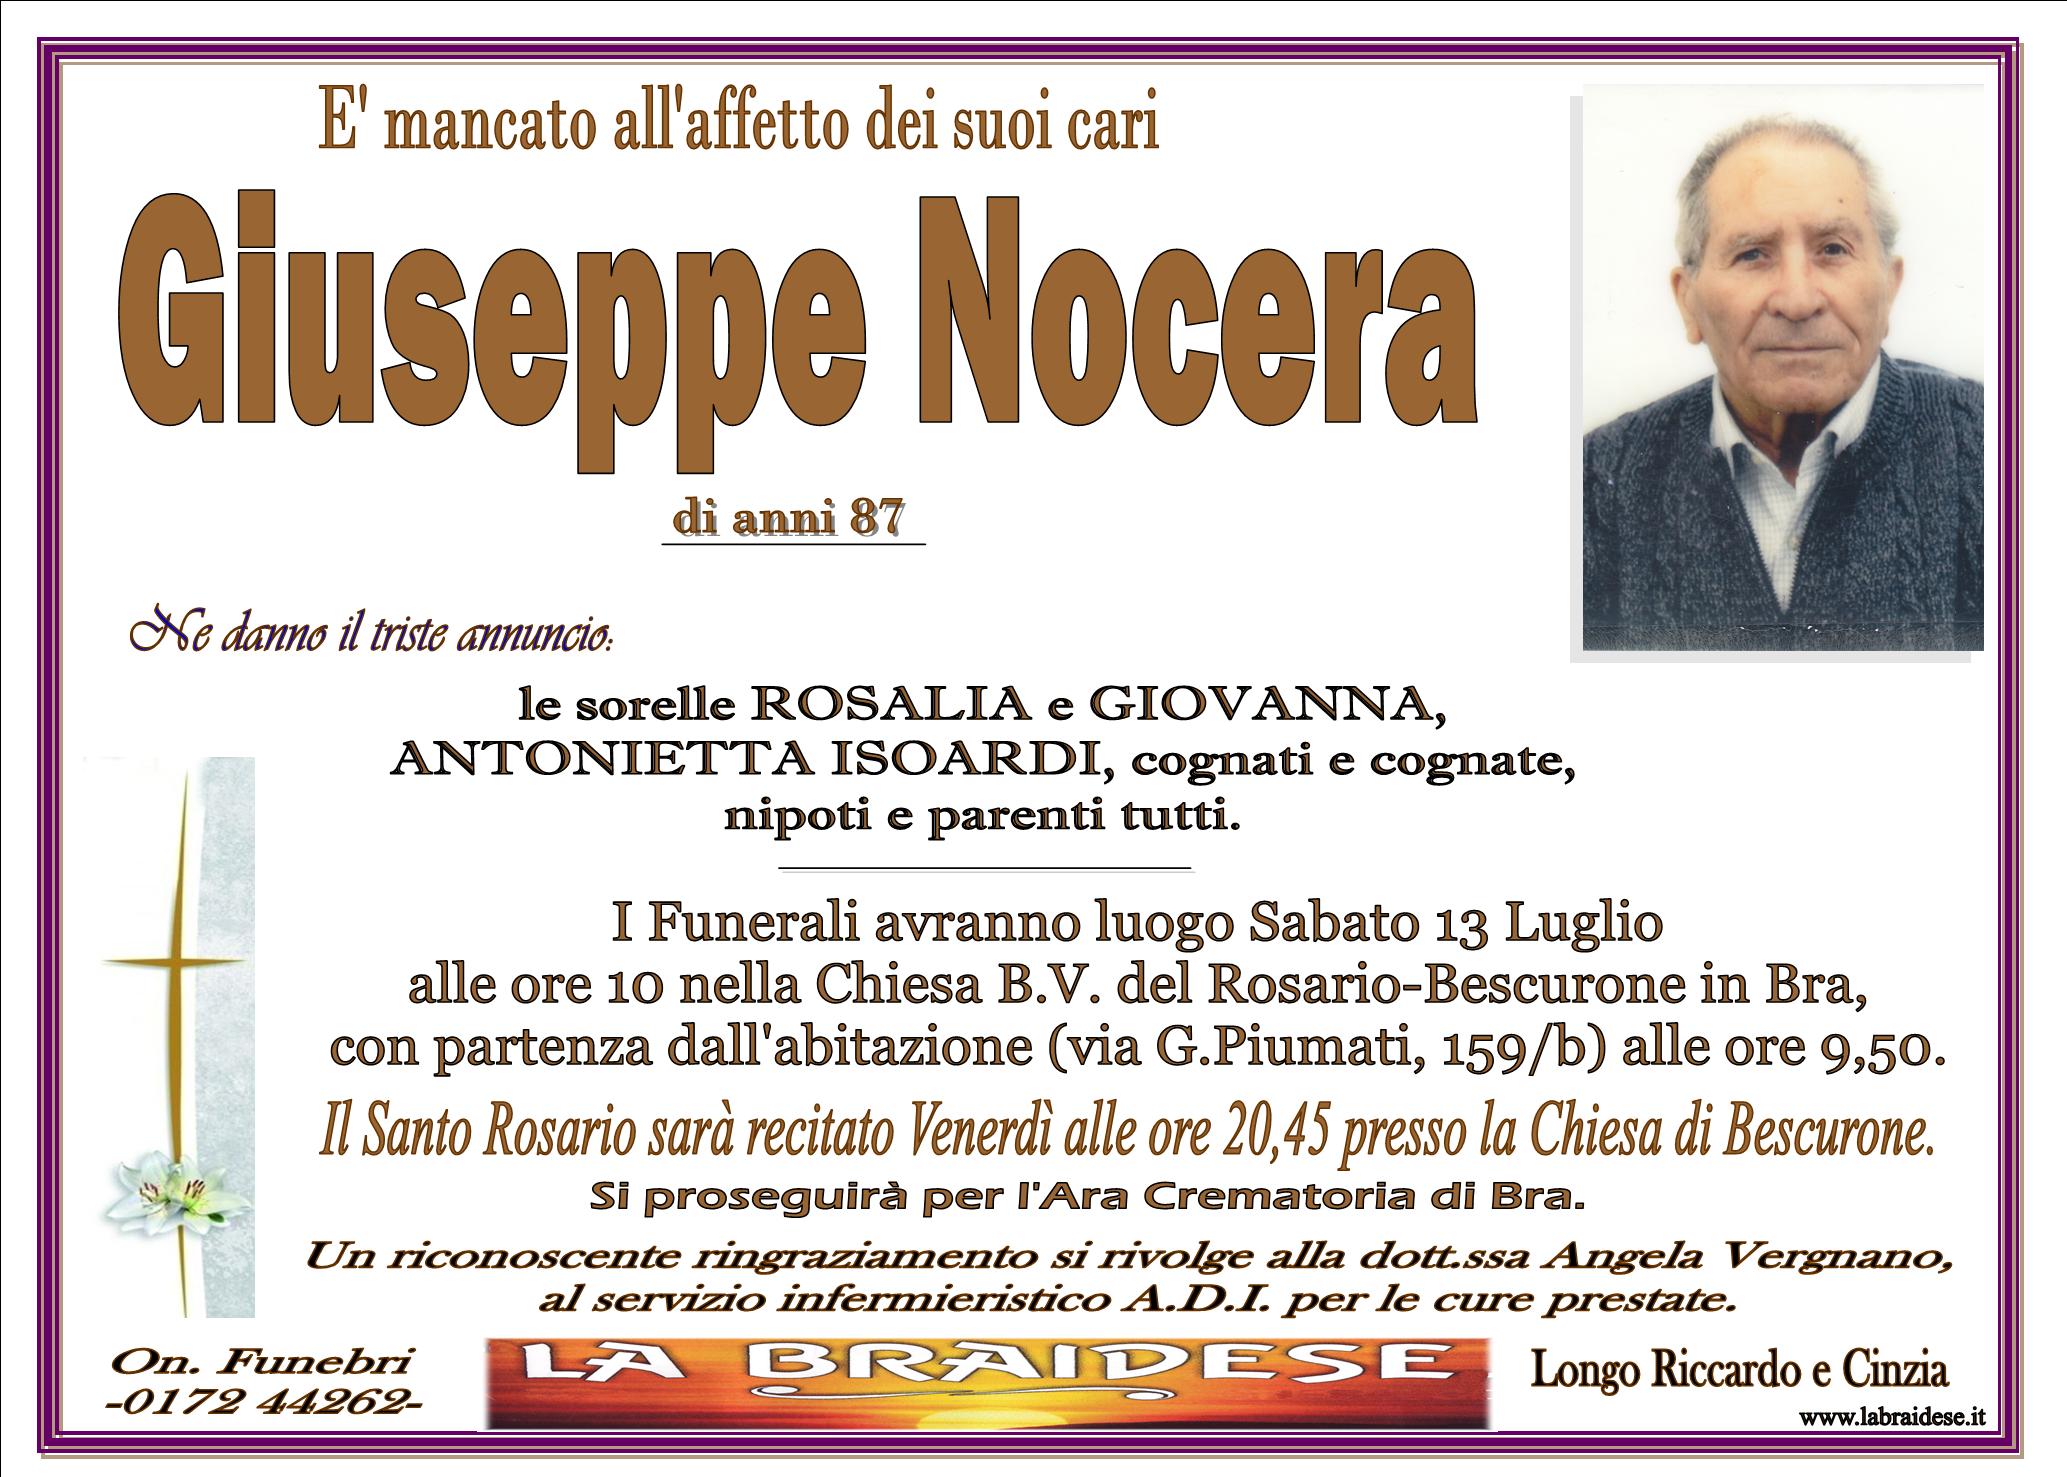 Giuseppe Nocera